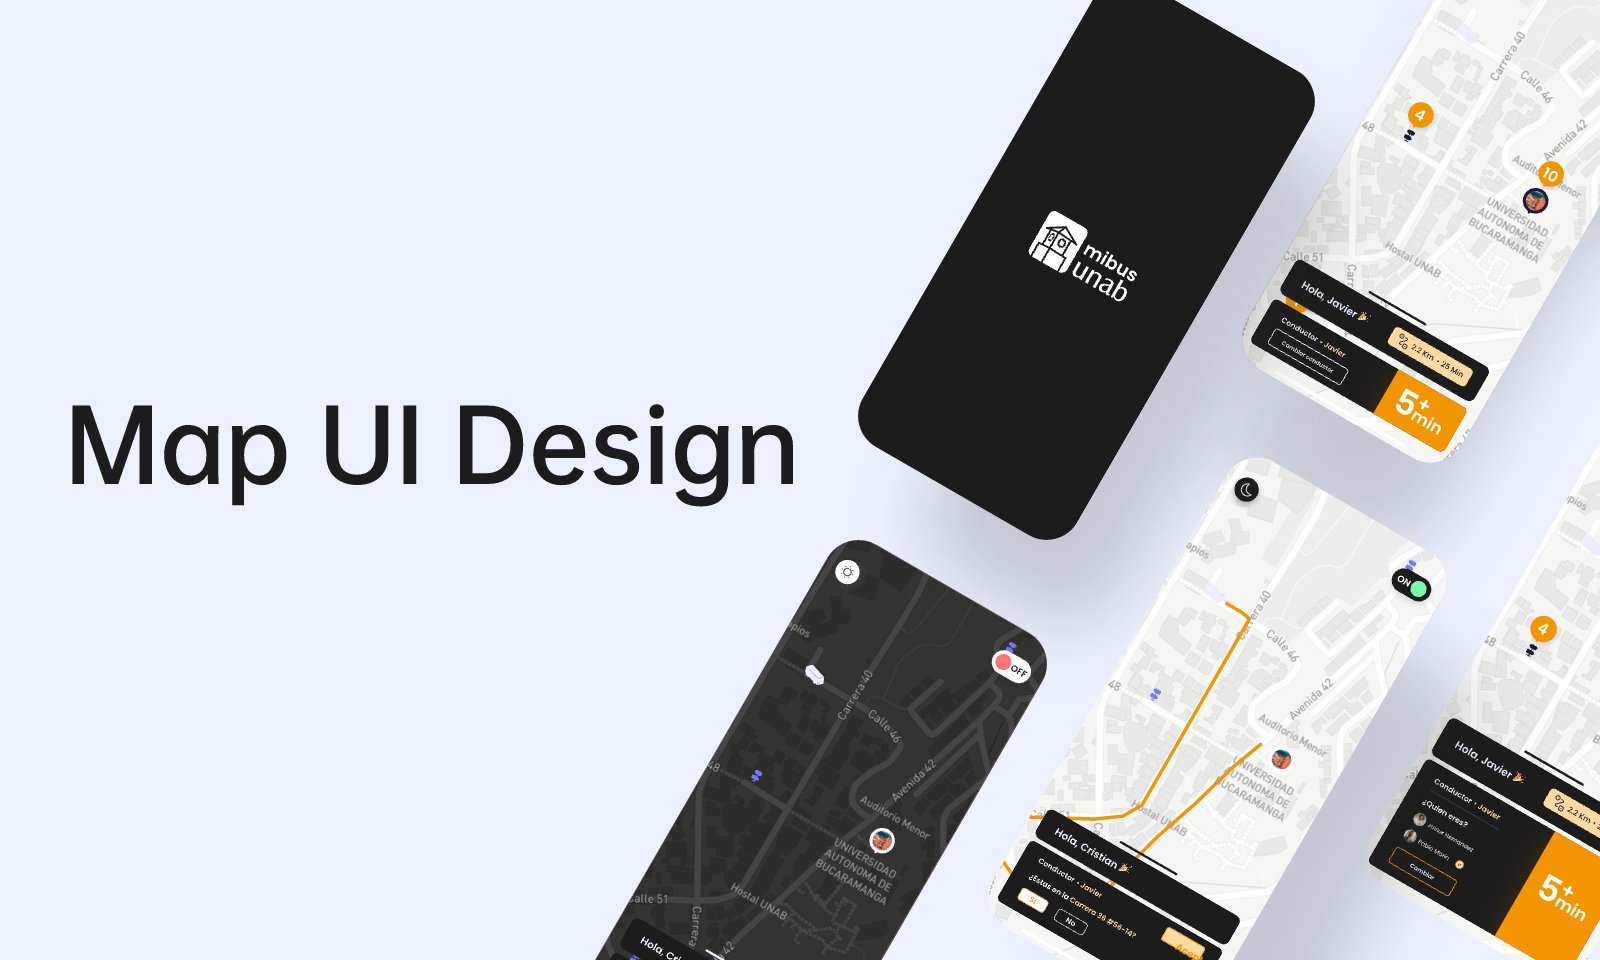  [Detailed Guide] Map UI Design